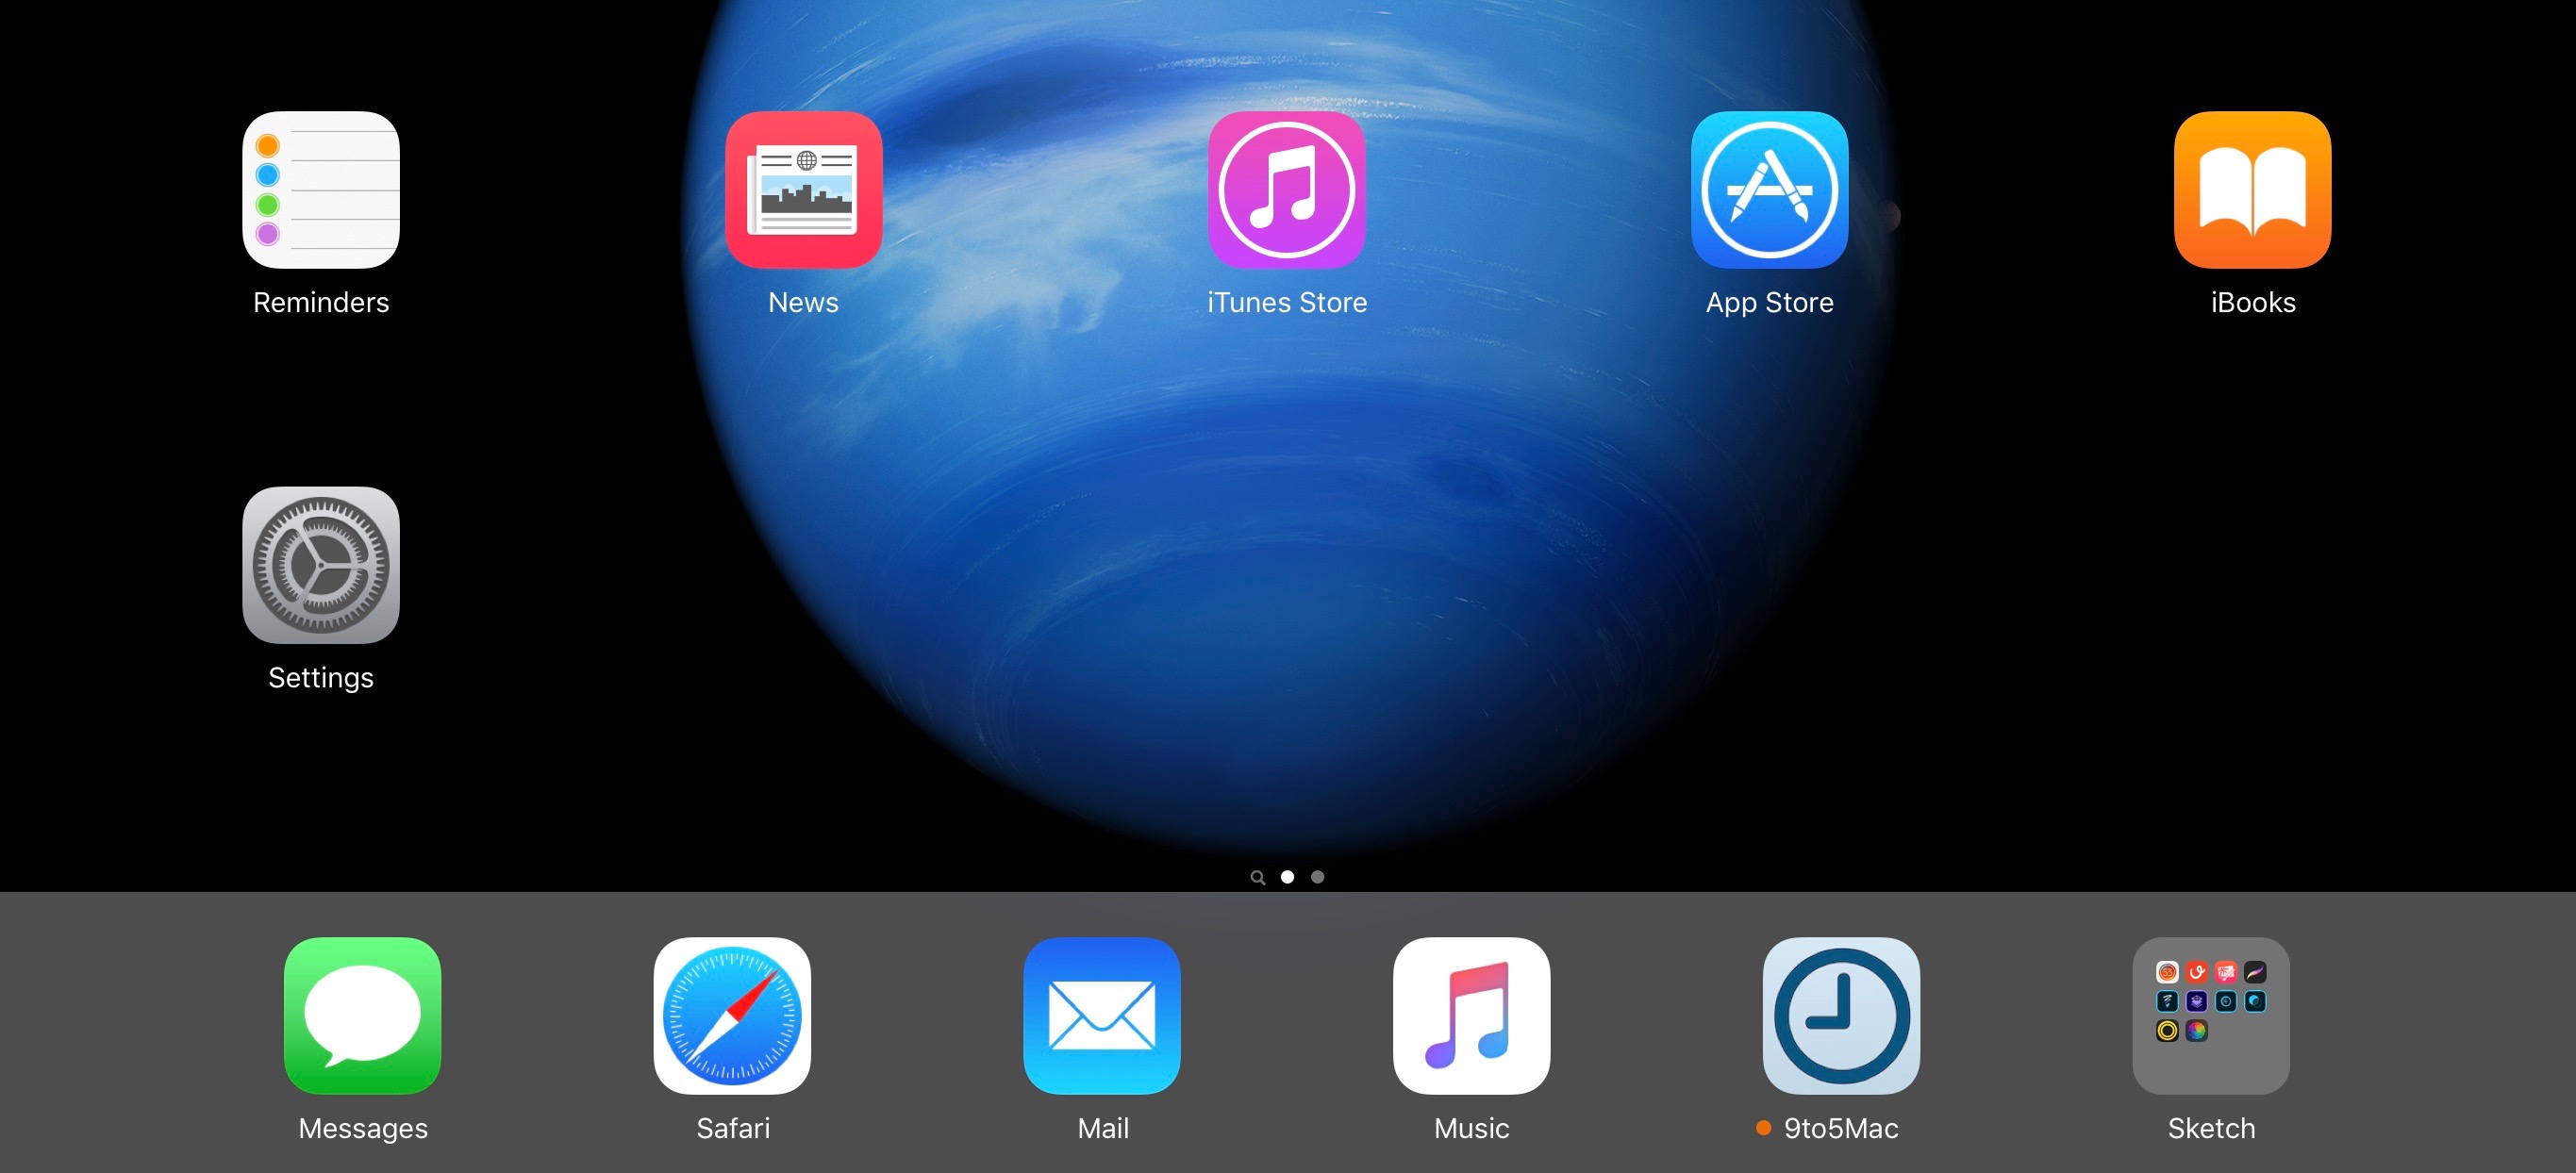 iPad Pro dock